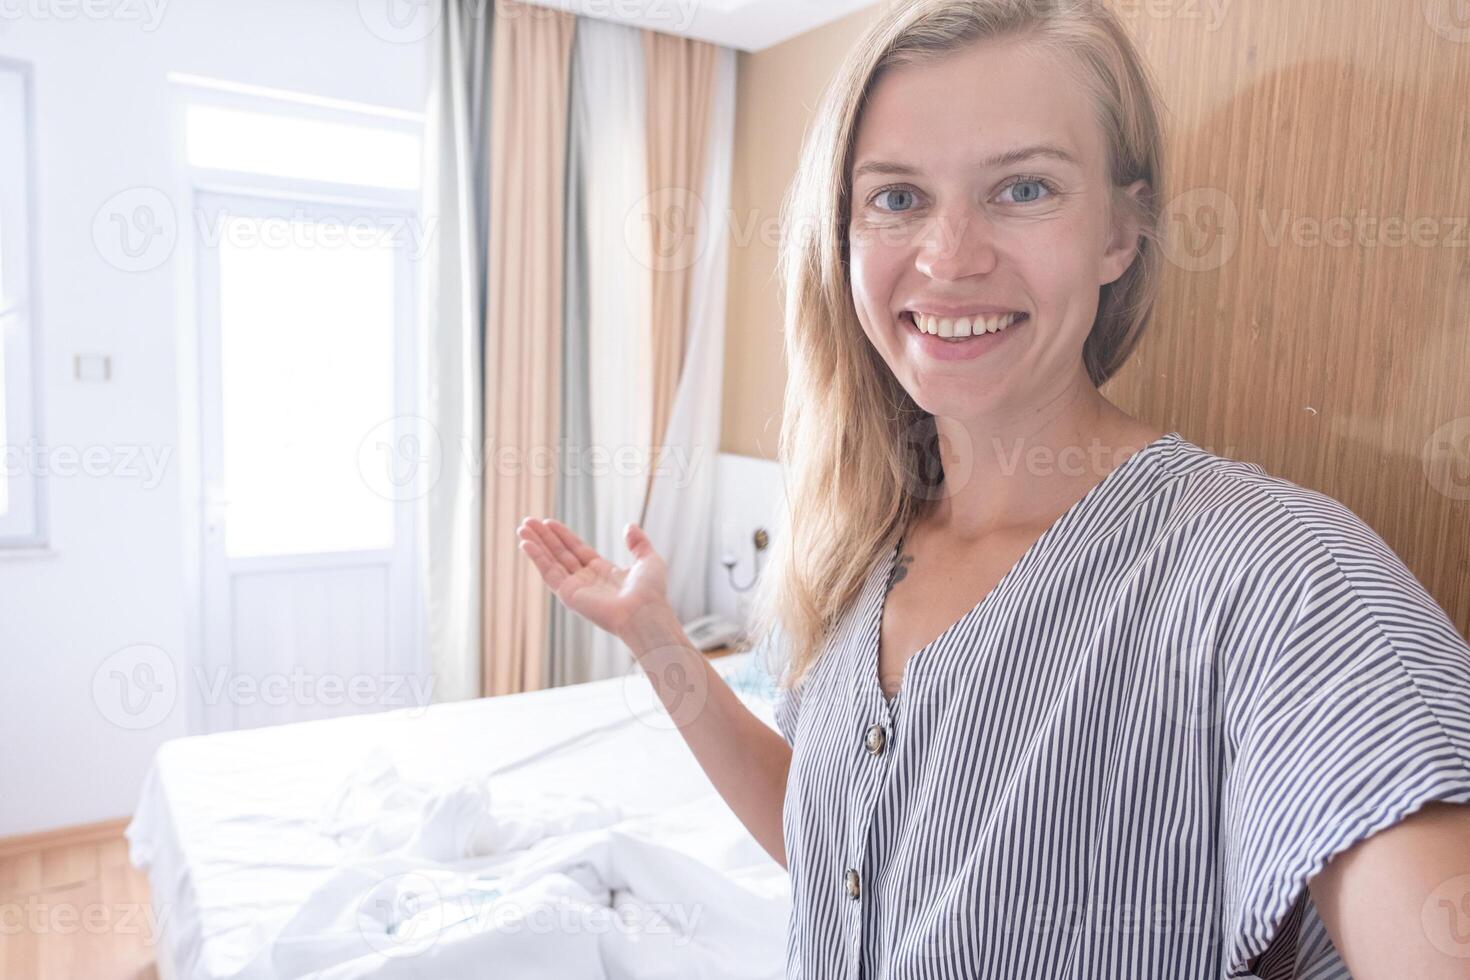 Happy woman showing her hotel room taking selfie photo